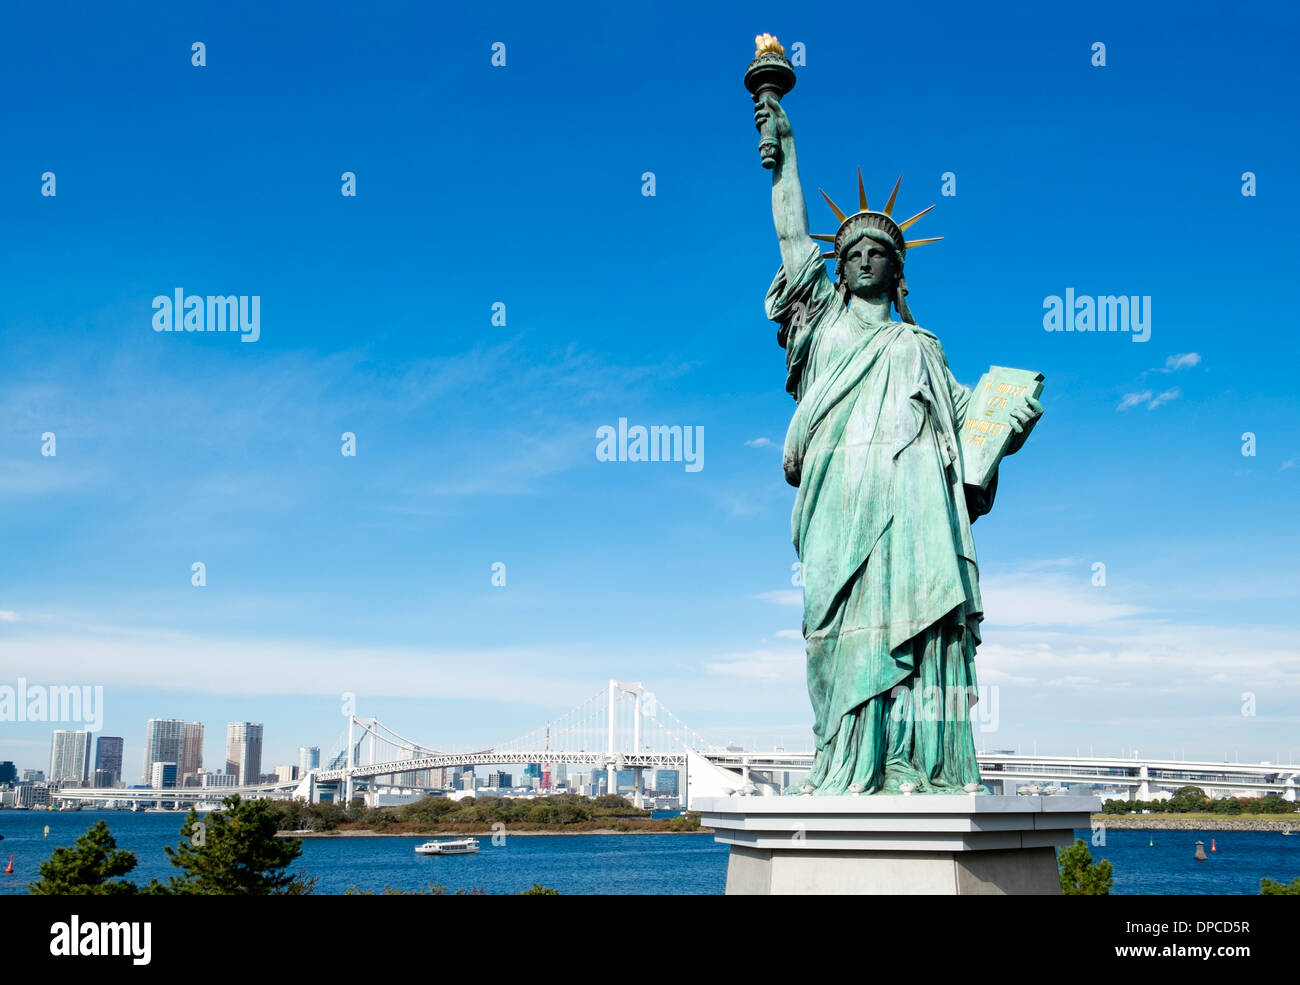 Replica of Statue of Liberty replica in Tokyo Bay at Odaiba in Tokyo Japan Stock Photo